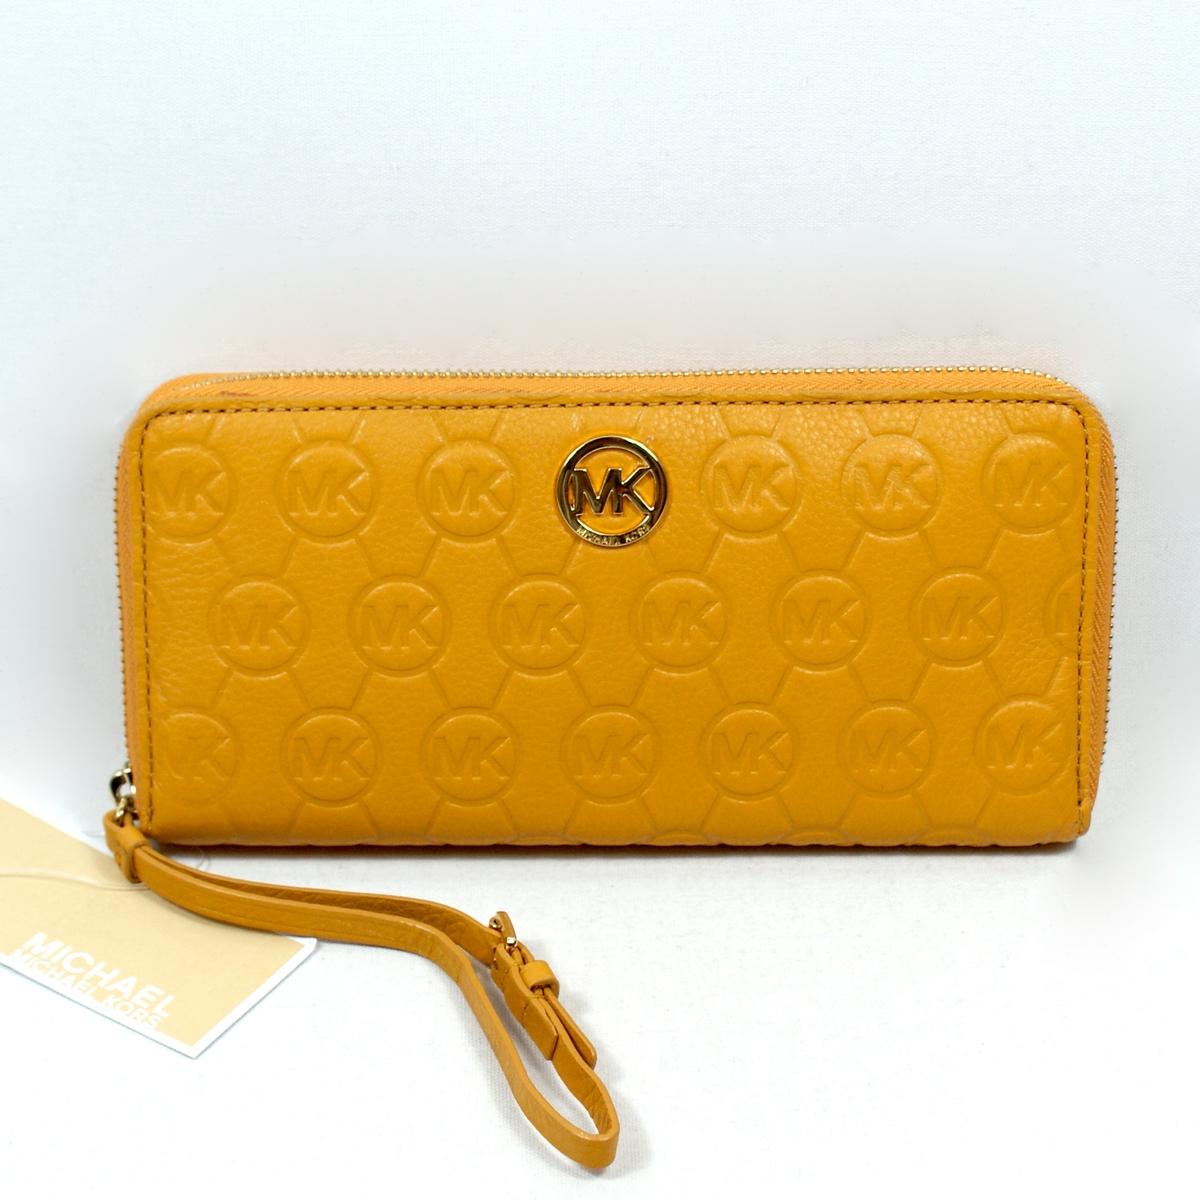 marigold michael kors wallet